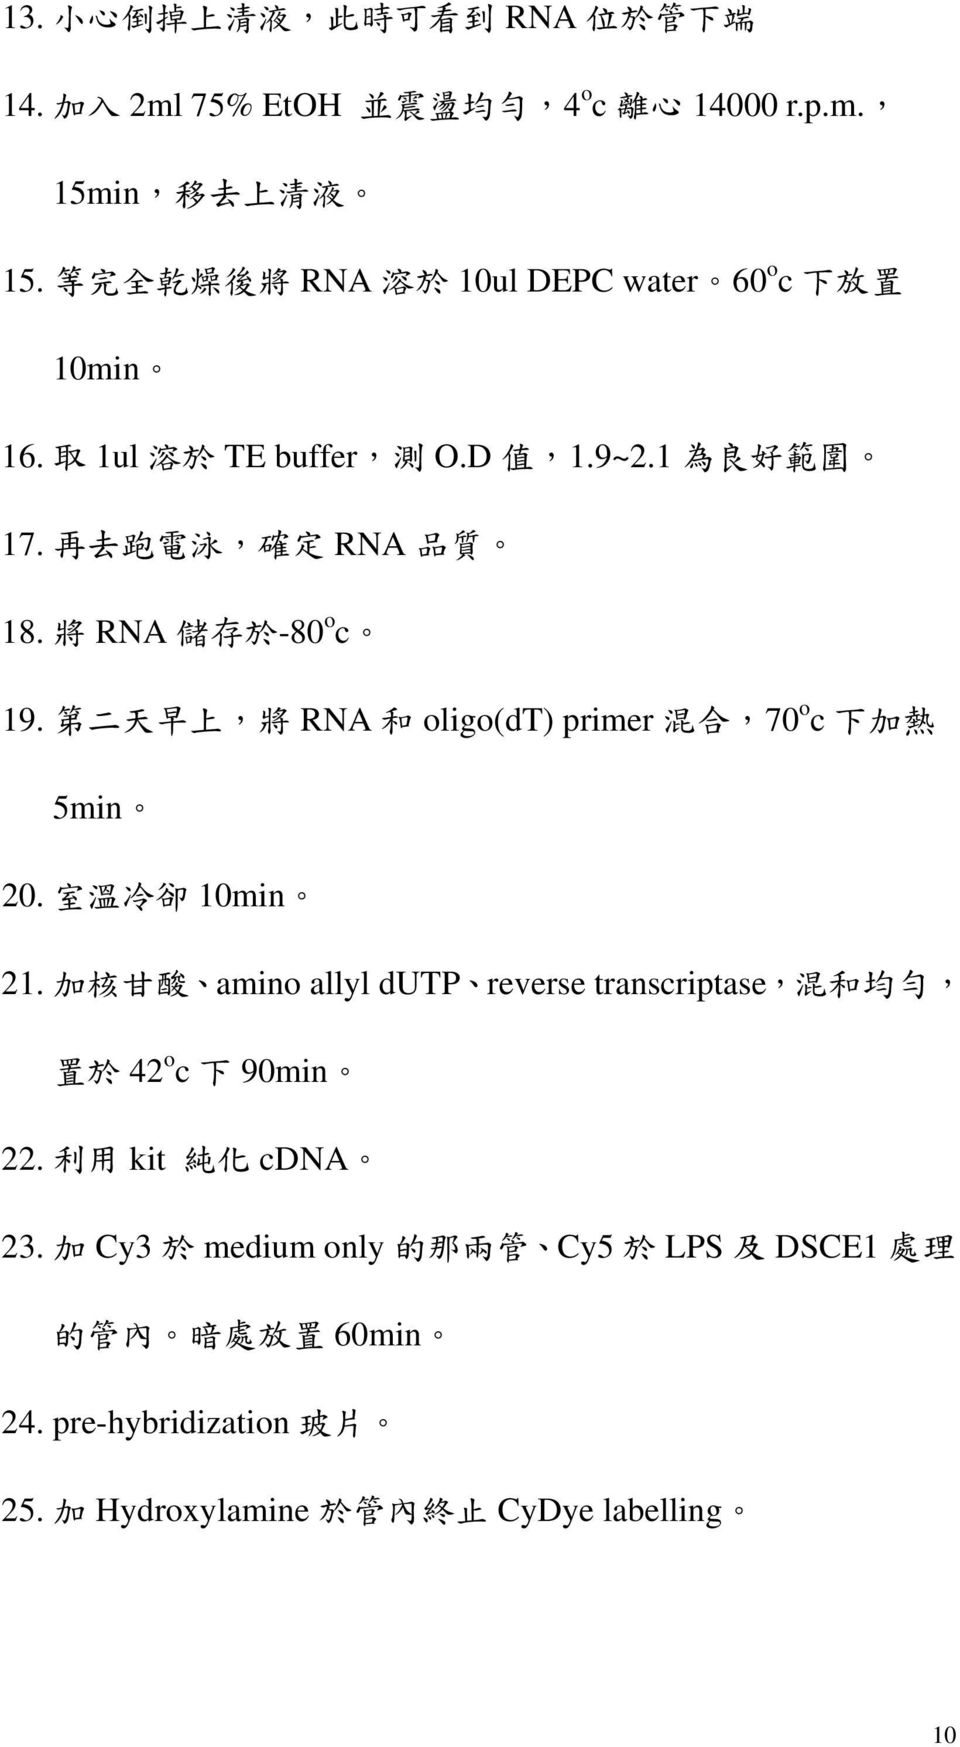 冷 10min 21. amino allyl dutp reverse transcriptase 42 o c 90min 22. 利 kit cdna 23.